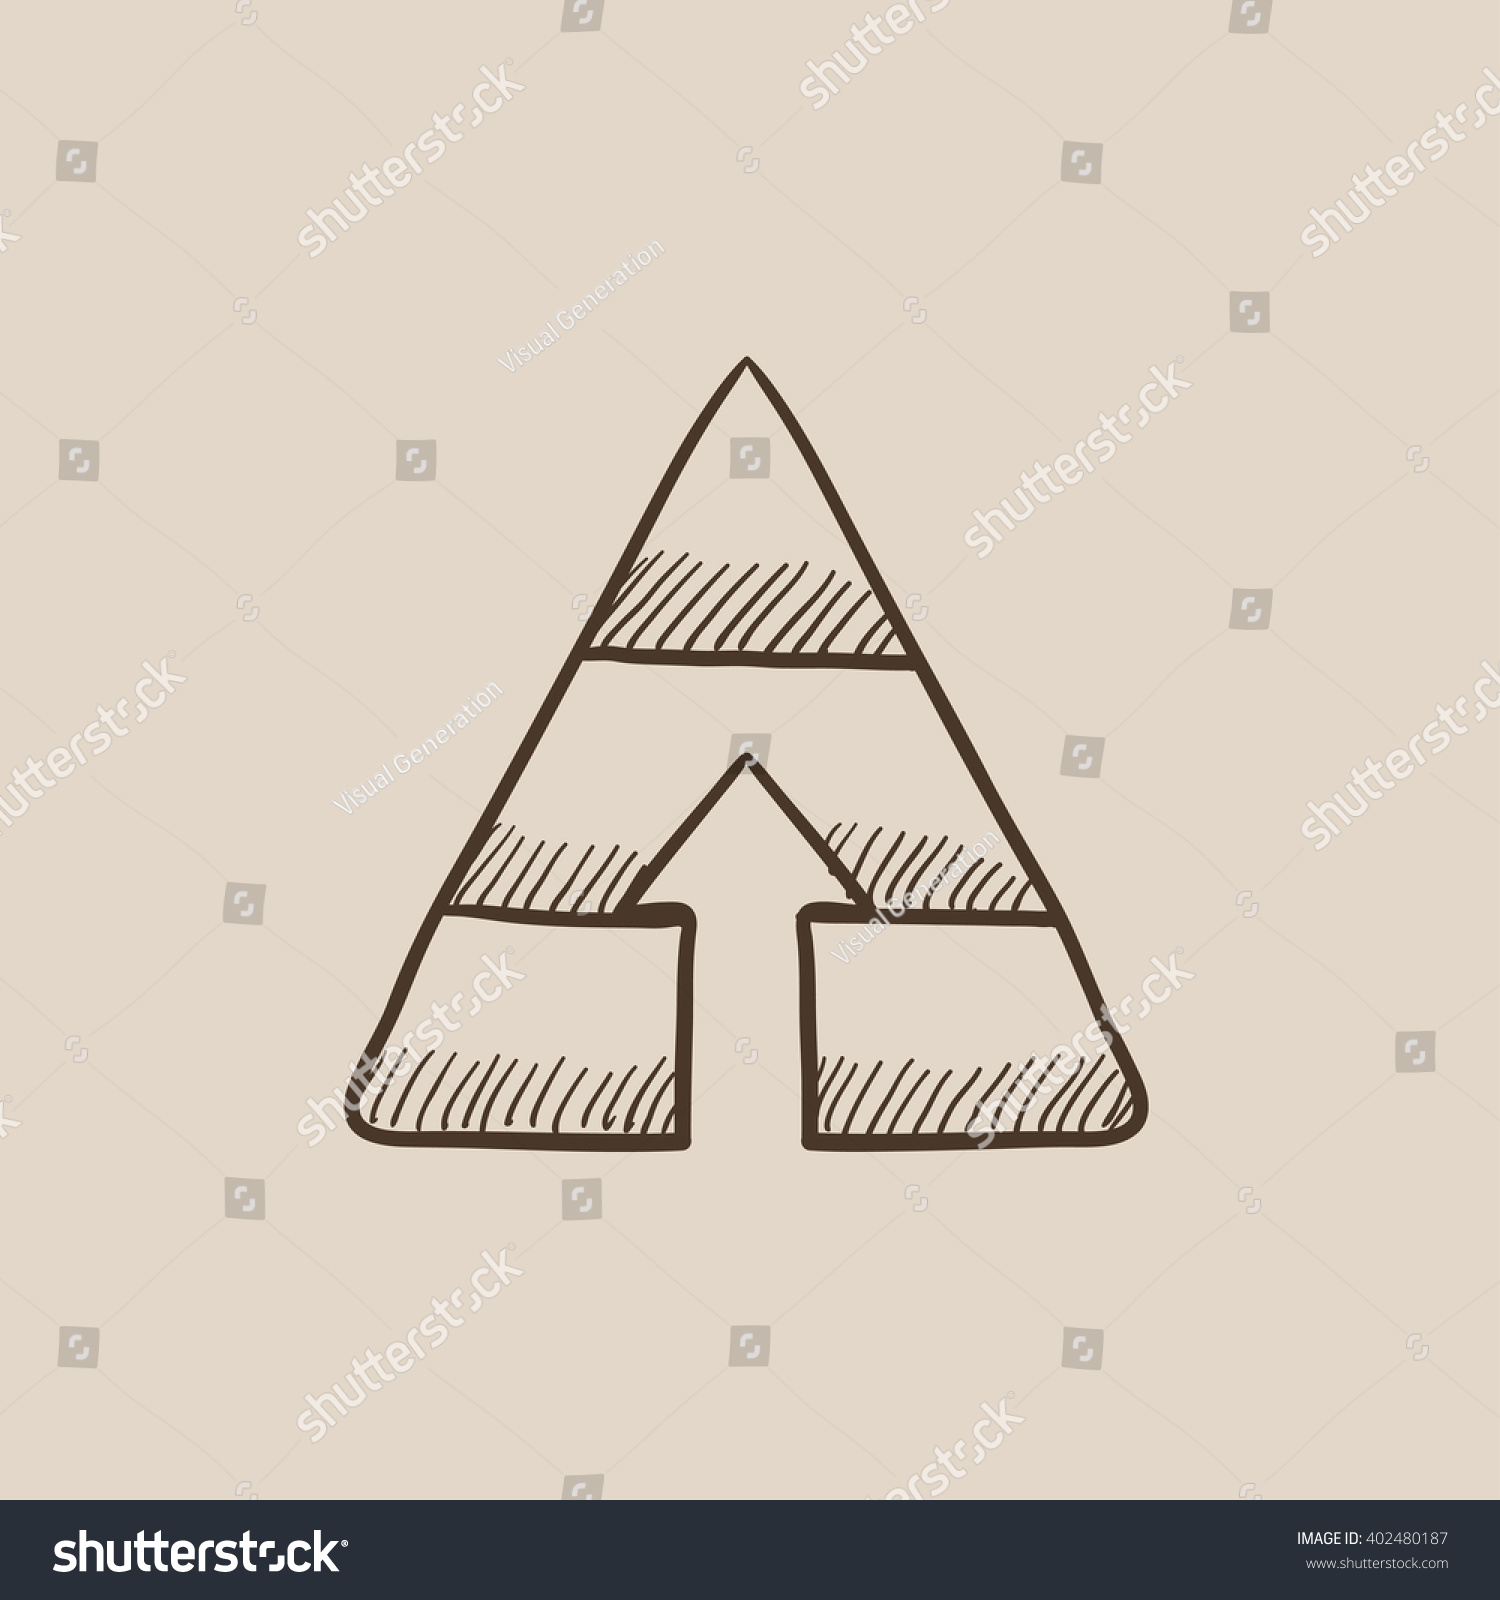 Pyramid Arrow Sketch Icon Stock Illustration 402480187 - Shutterstock